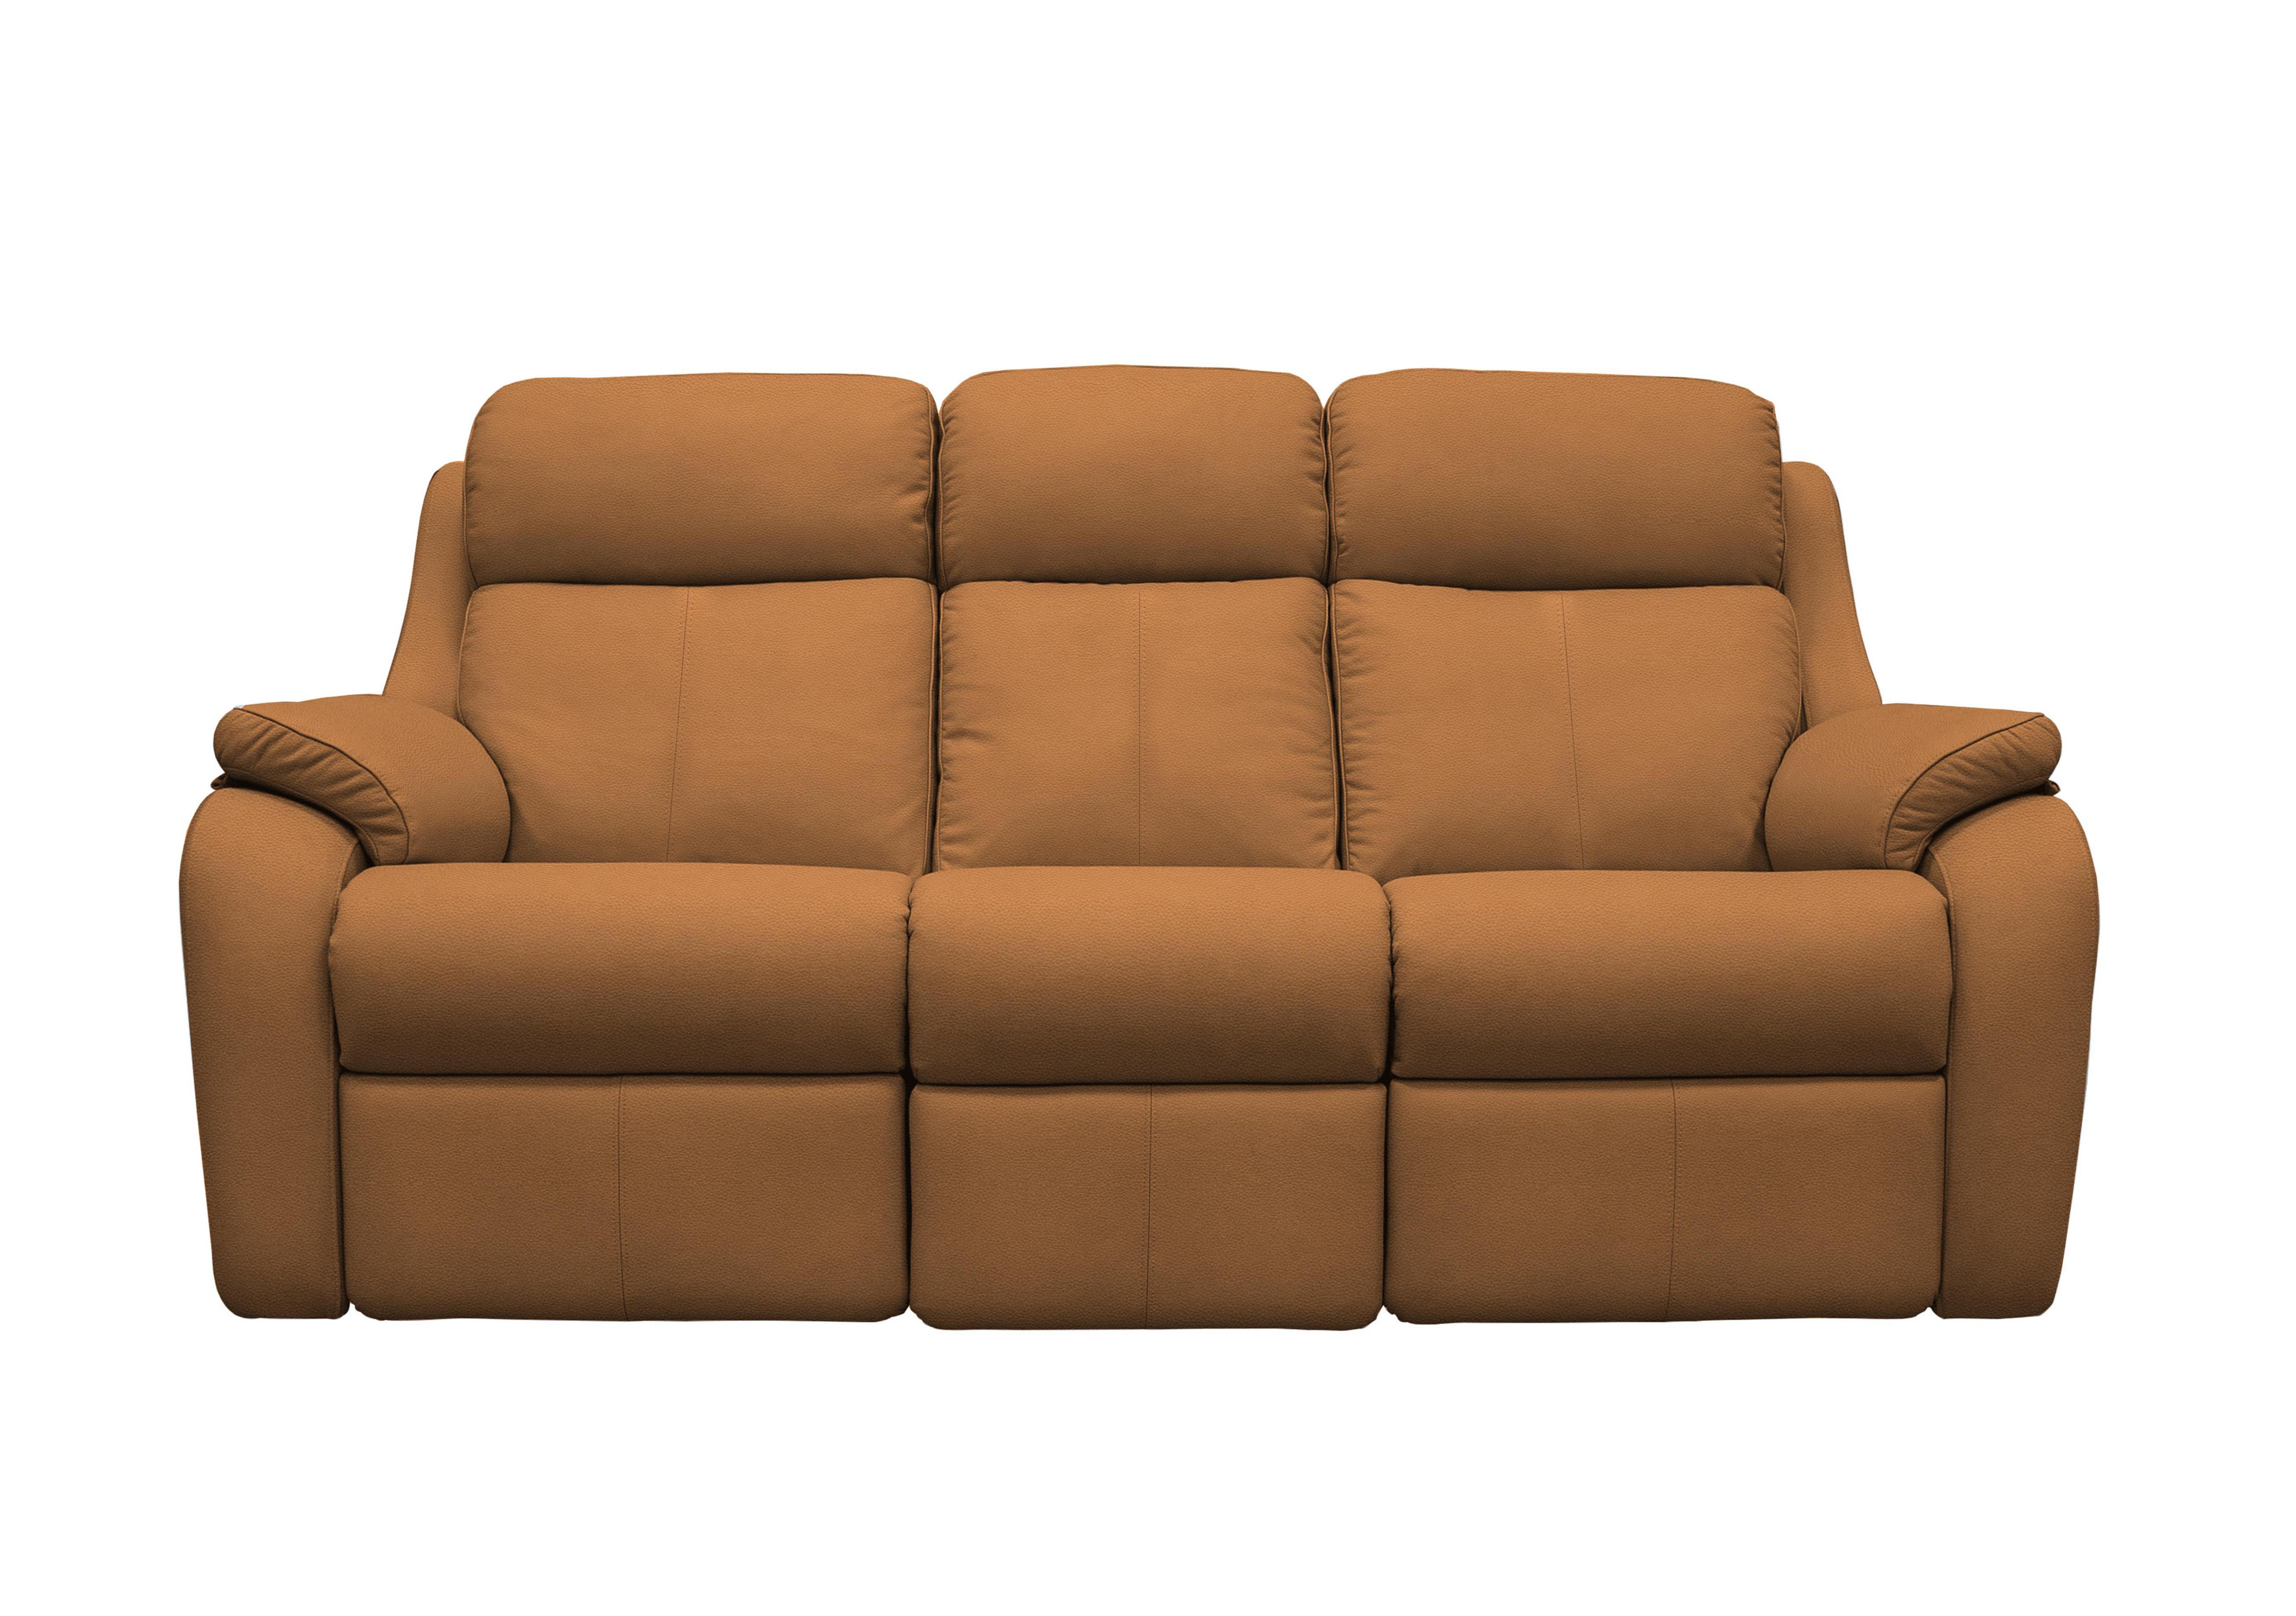 Kingsbury 3 Seater Leather Sofa in L847 Cambridge Tan on Furniture Village